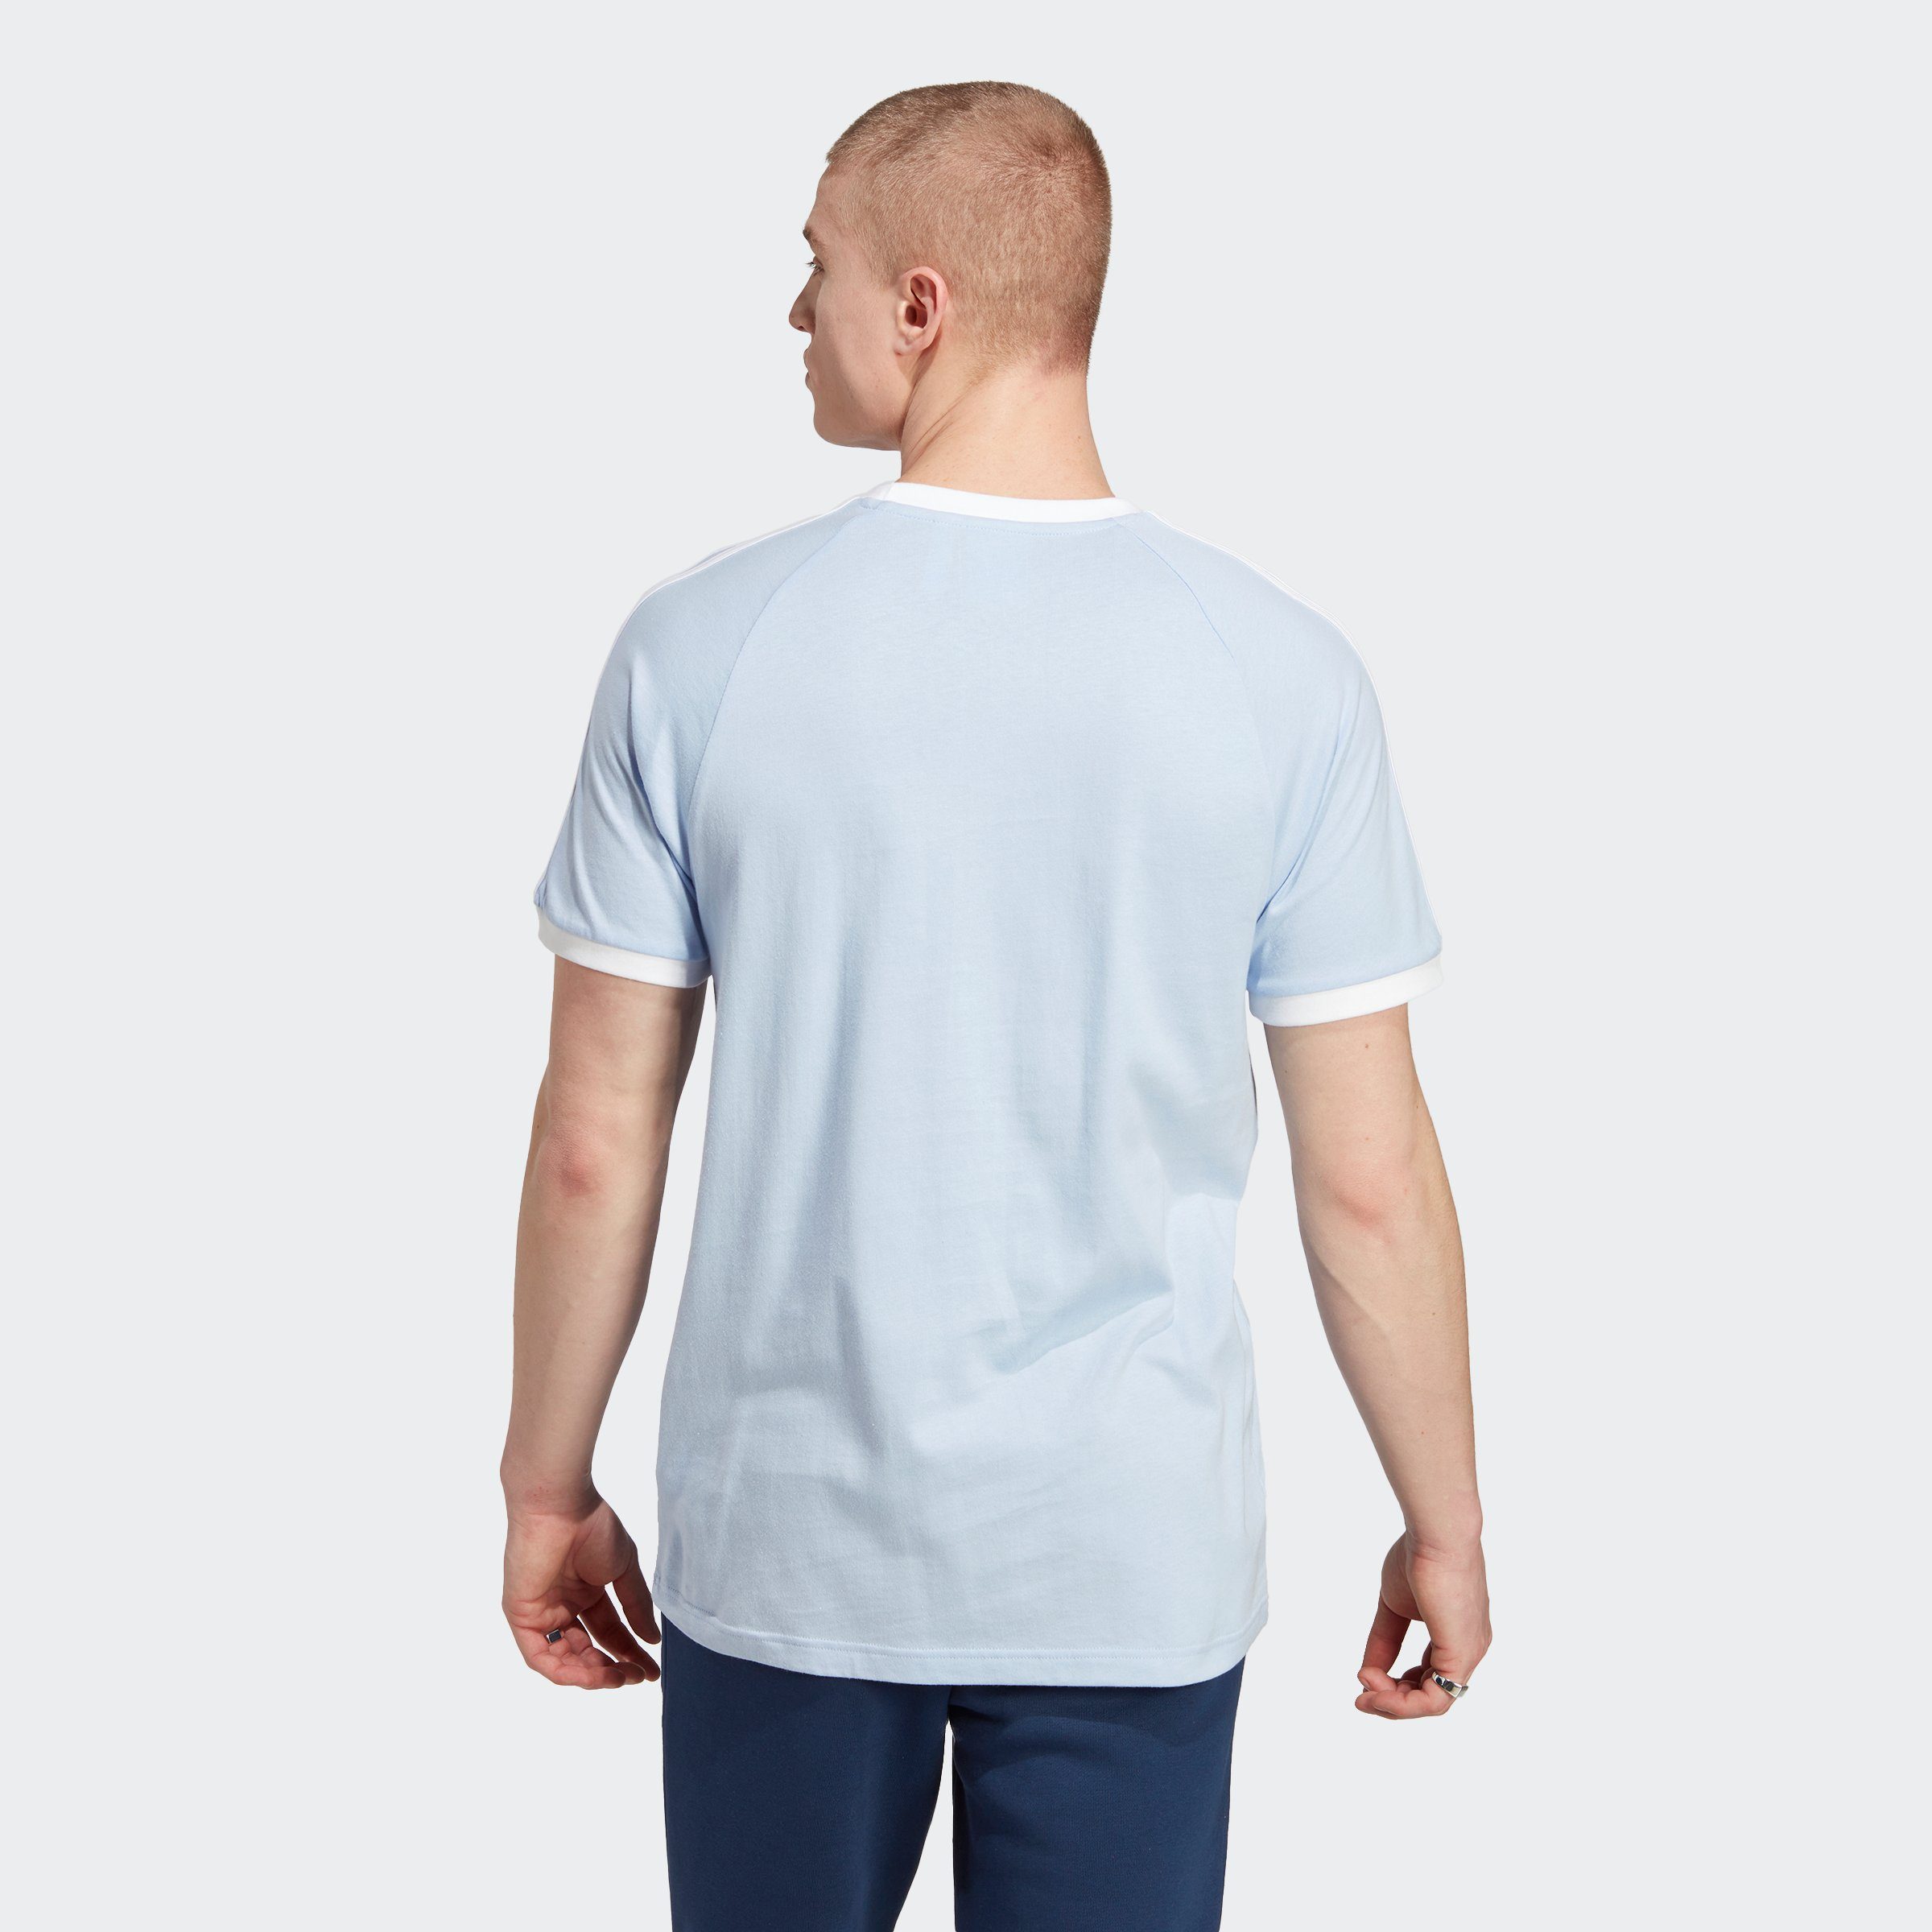 adidas Originals Dawn TEE T-Shirt Blue 3-STRIPES